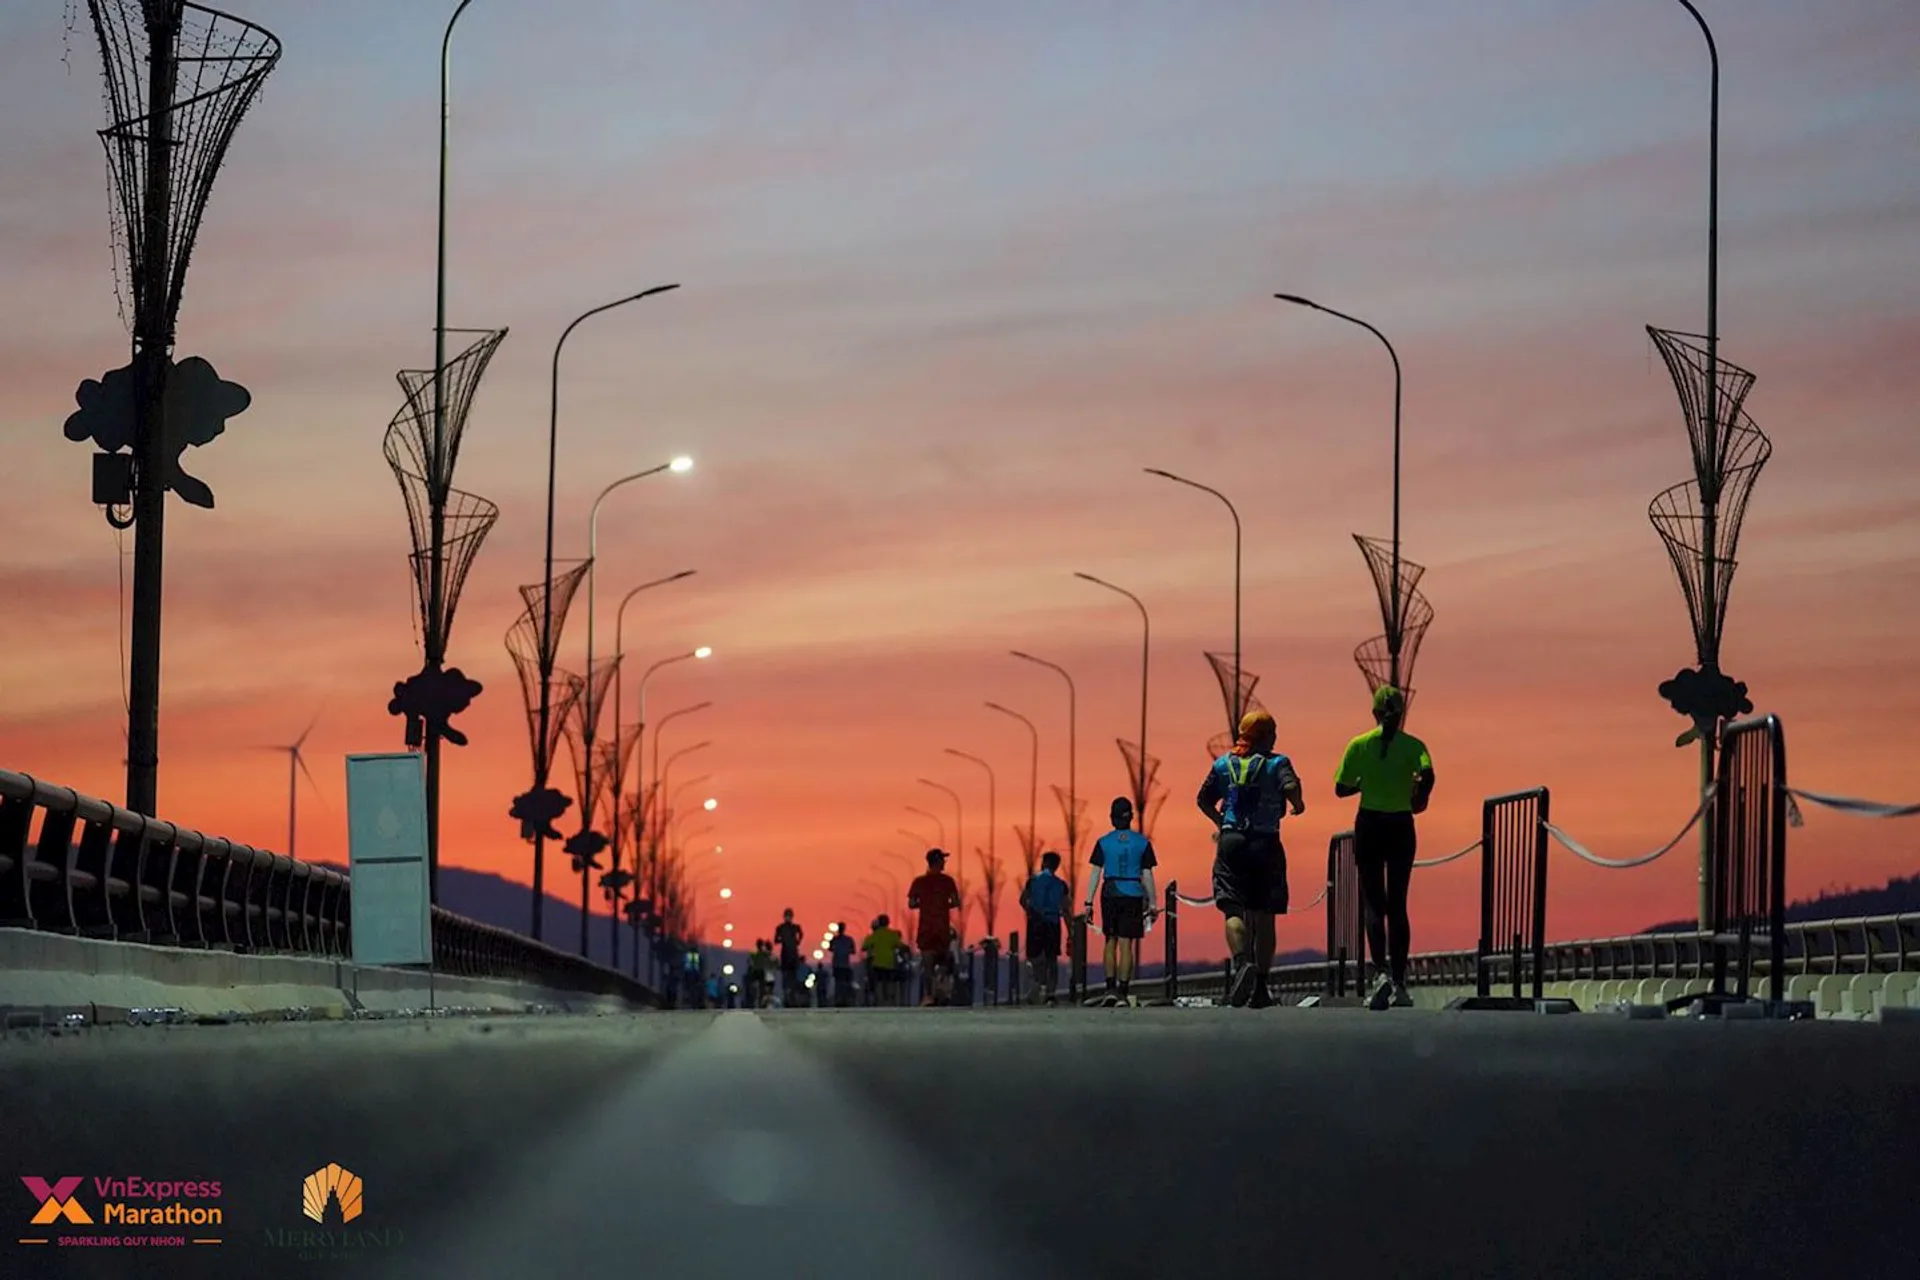 VnExpress Marathon Quy Nhon